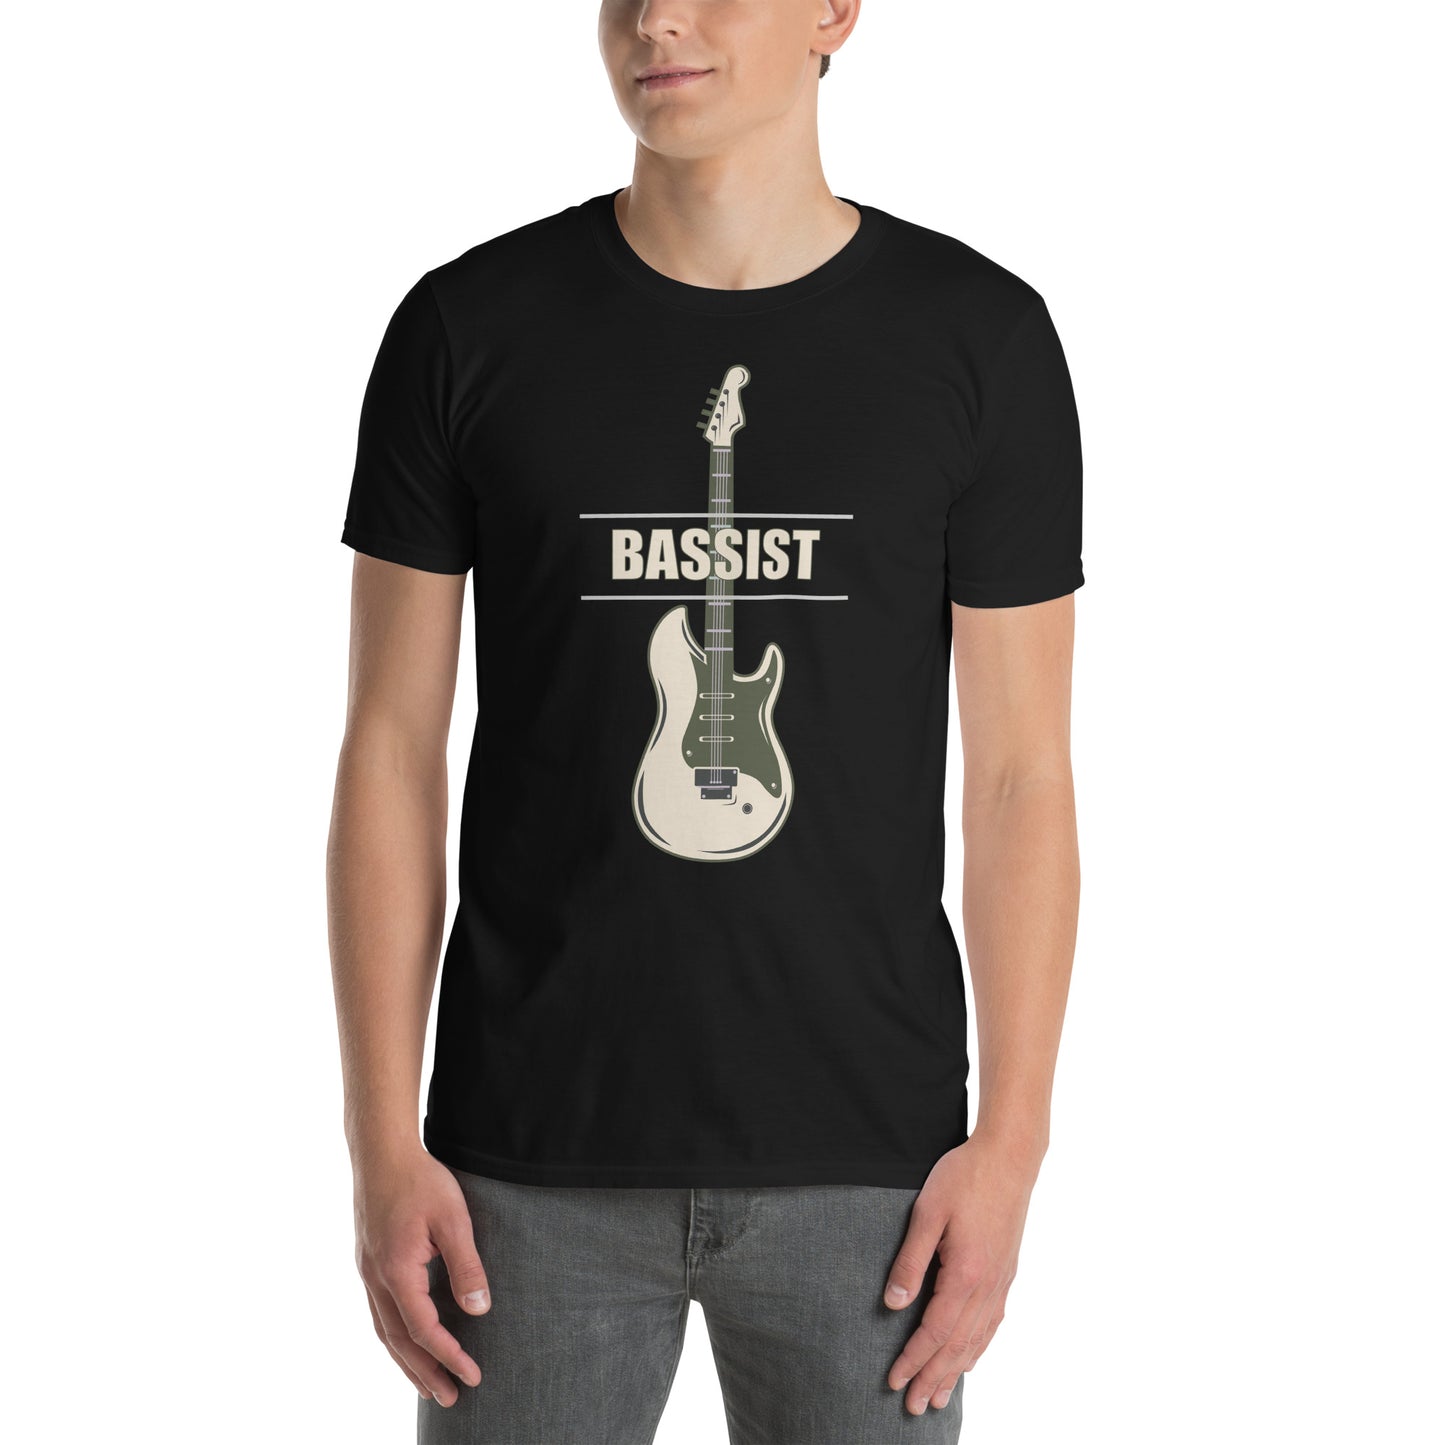 Bassist Shirt